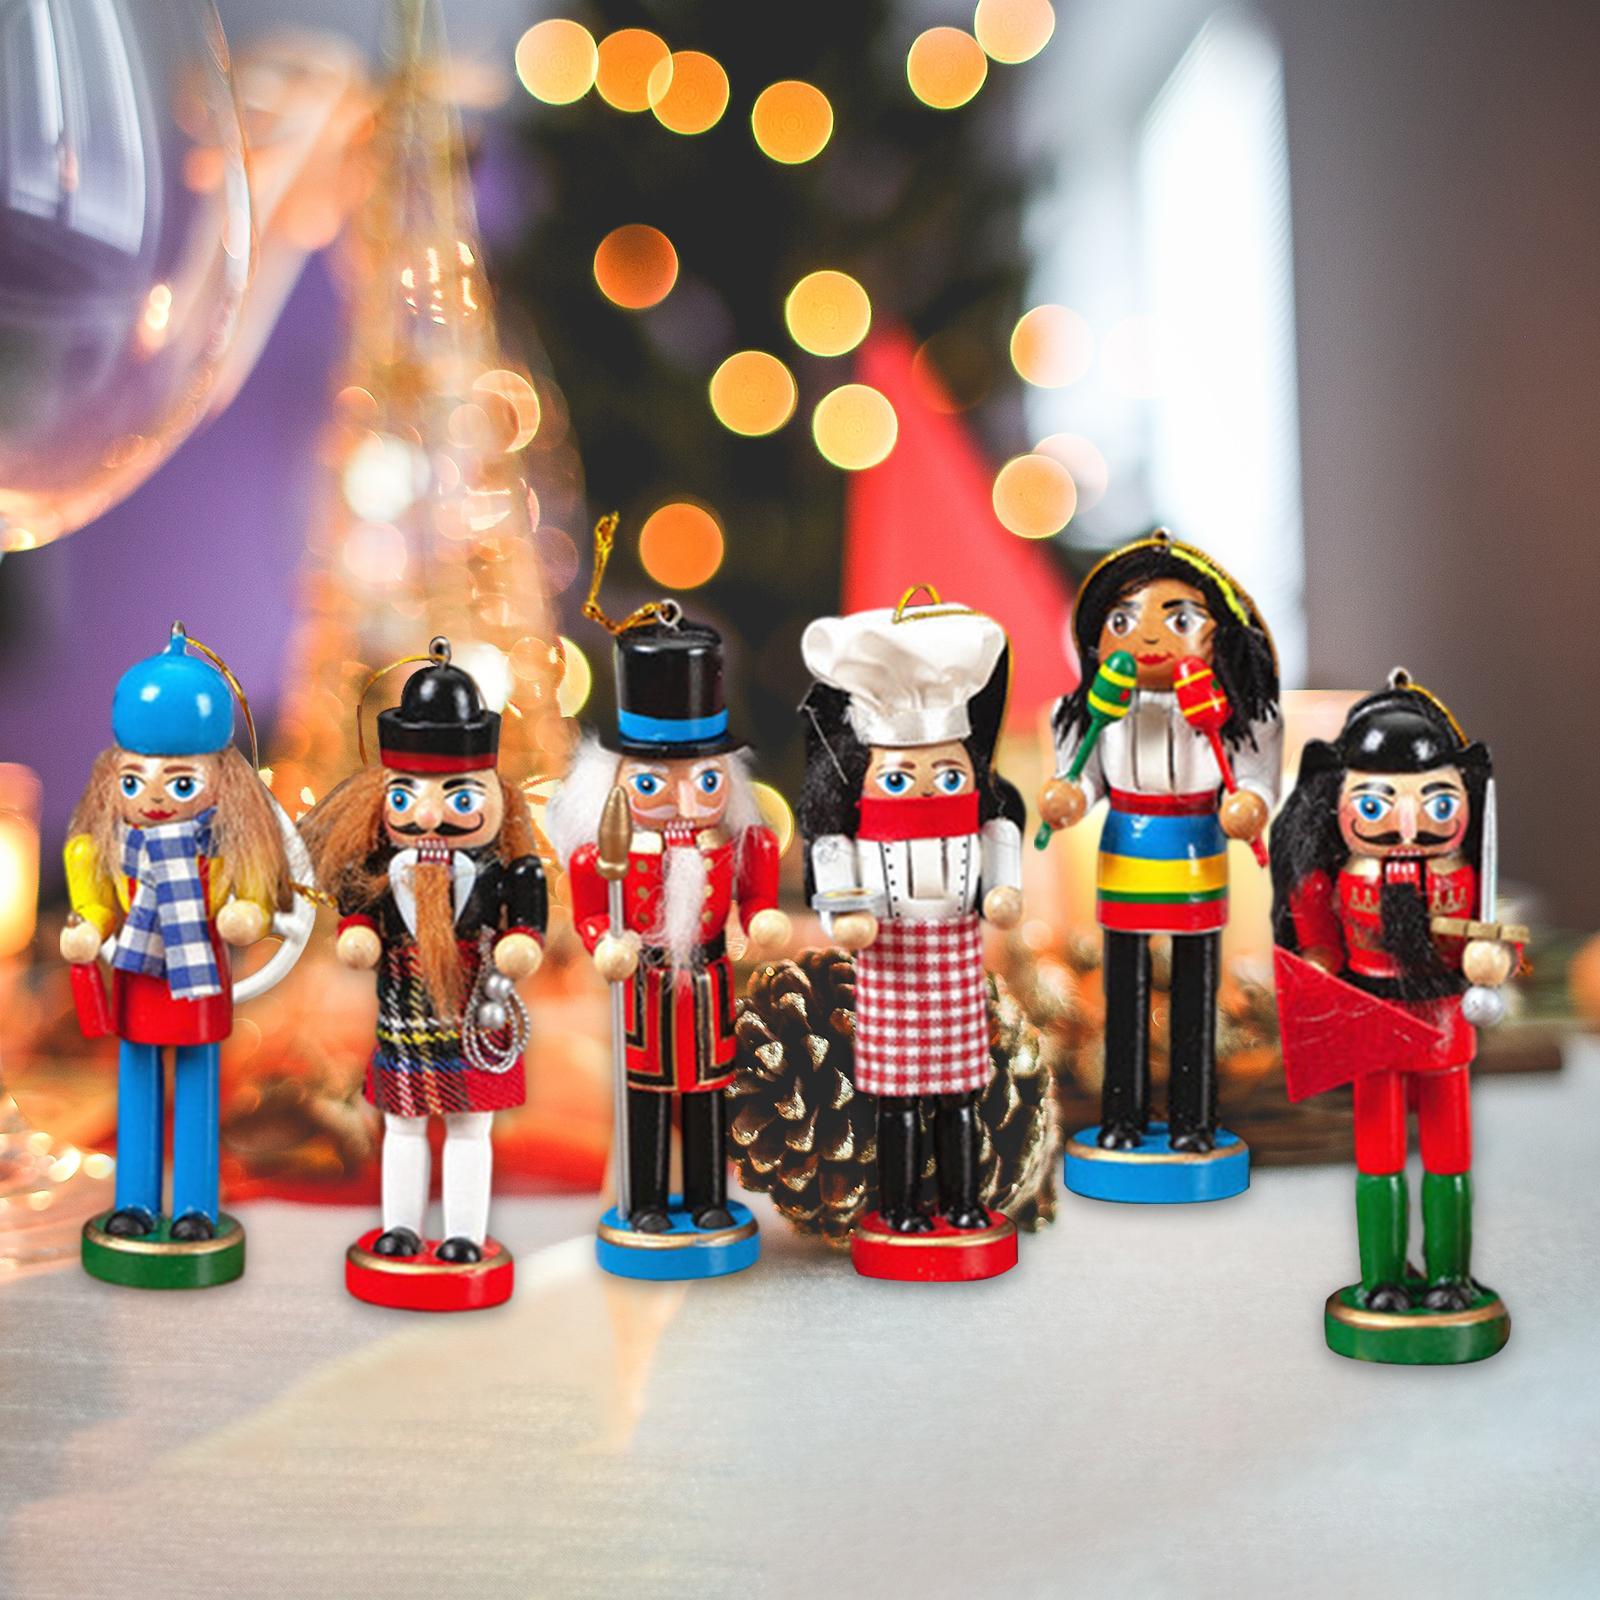 6 Pieces Wooden Nutcracker Christmas Nutcracker Figures for Kids Gifts Home